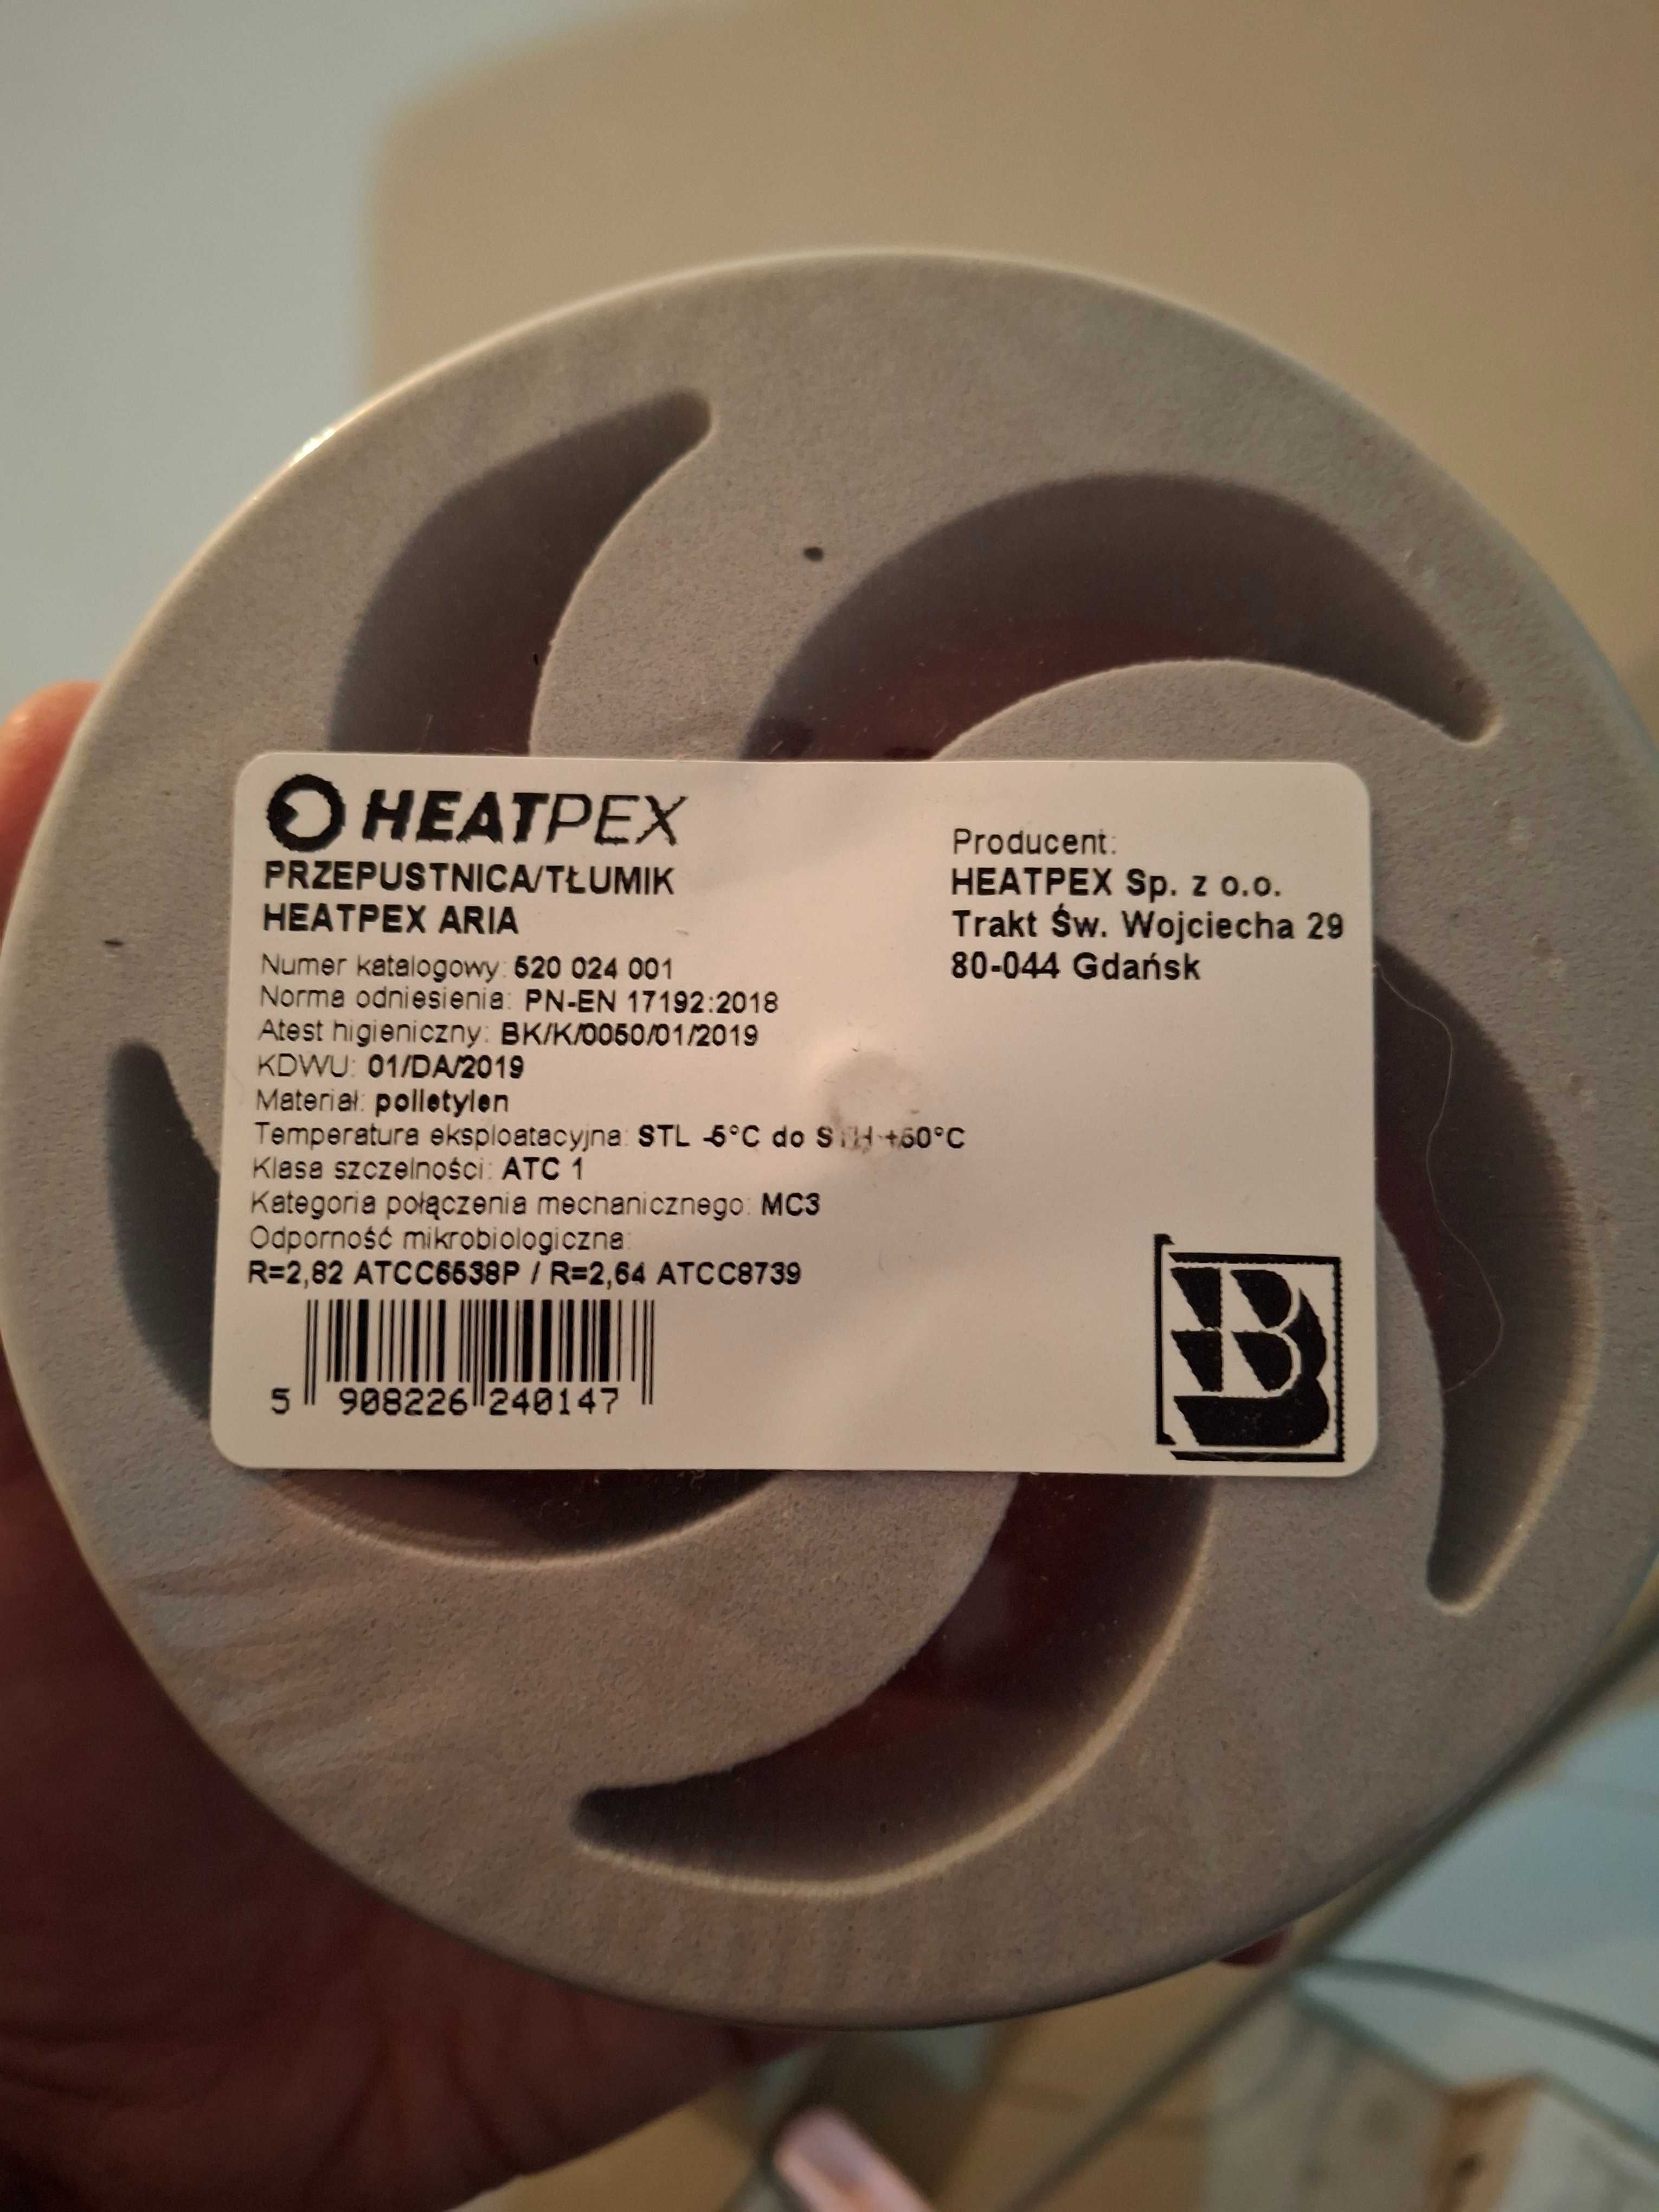 Heatpex Aria przepustnica/tłumik 125 mm